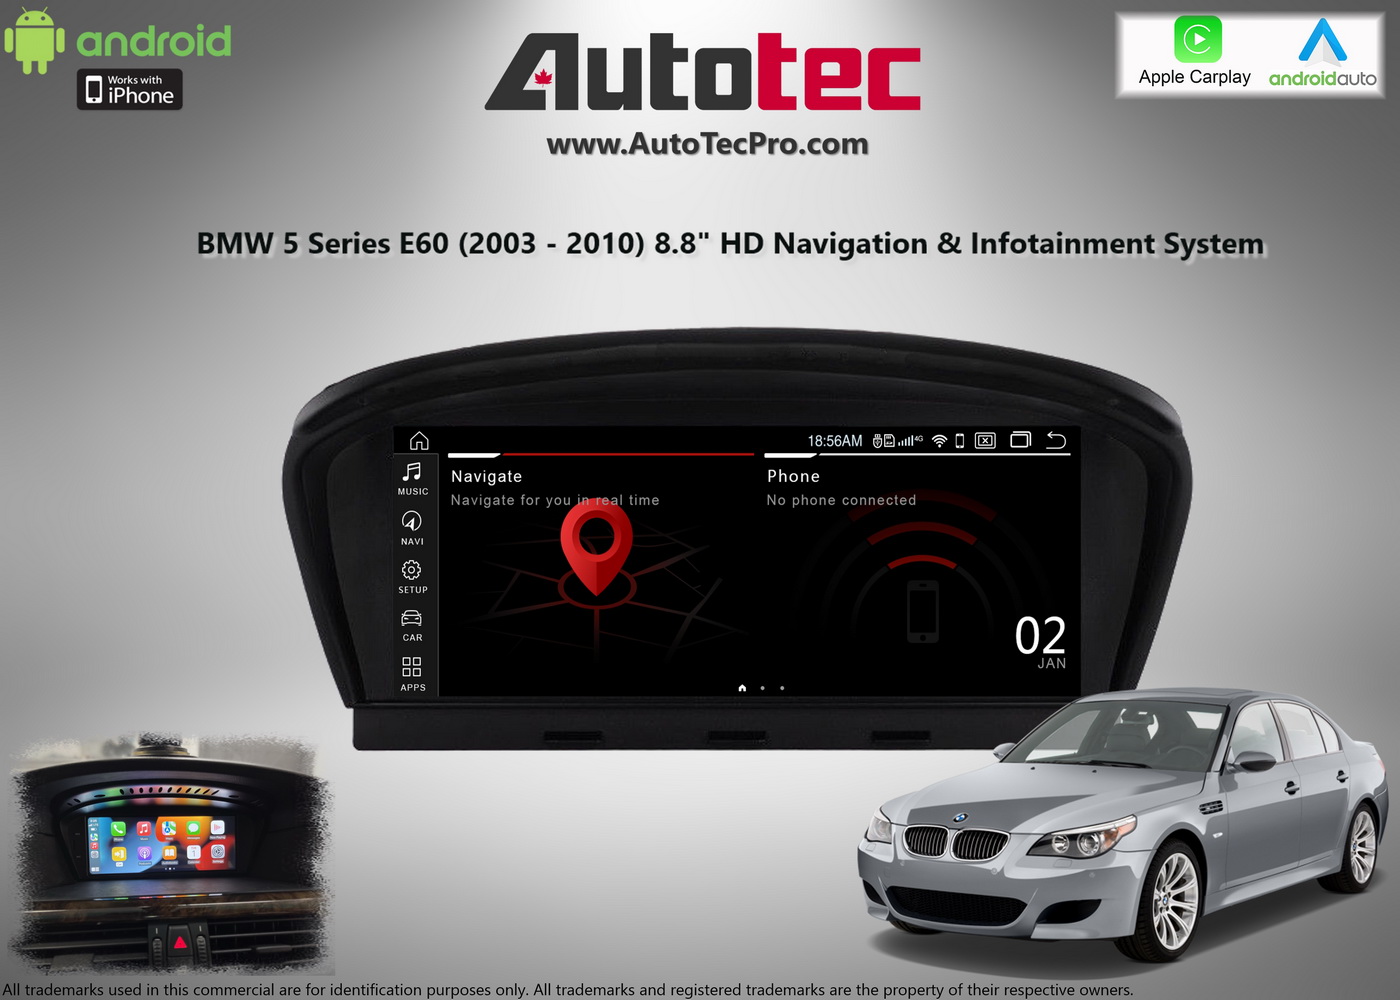 Genuine OEM GPS Navigation Start Up Disc For BMW E60 E61 528i xDrive 528xi 535i 535xi 550i M5 2008-2010 